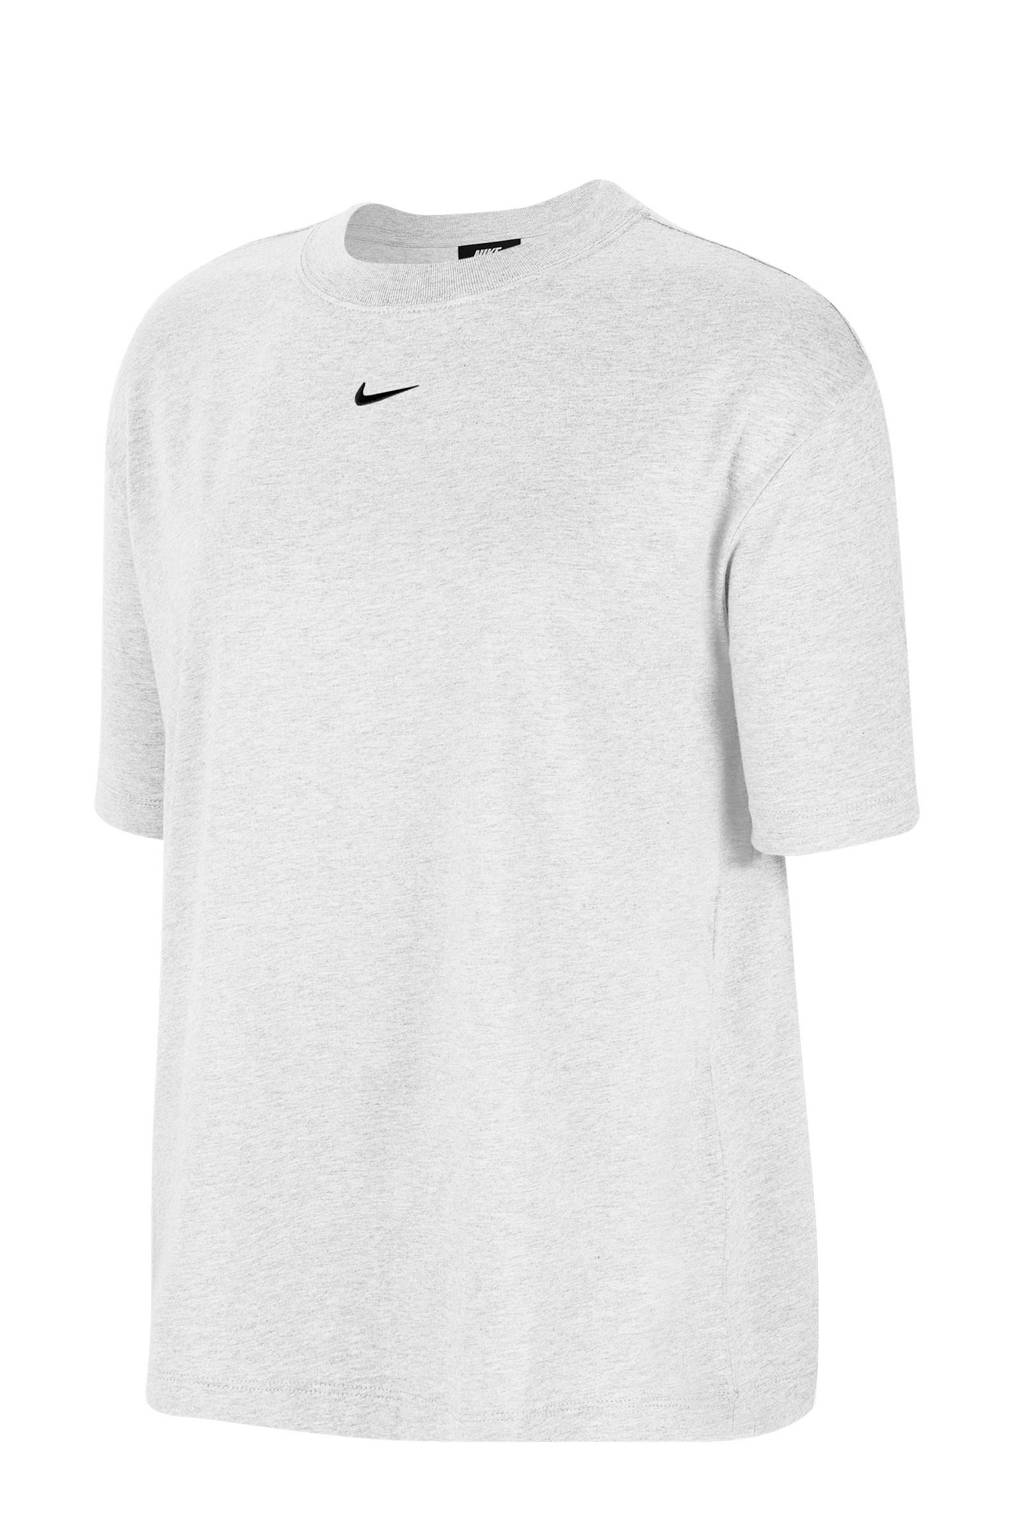 Nike T-shirt wit, Wit